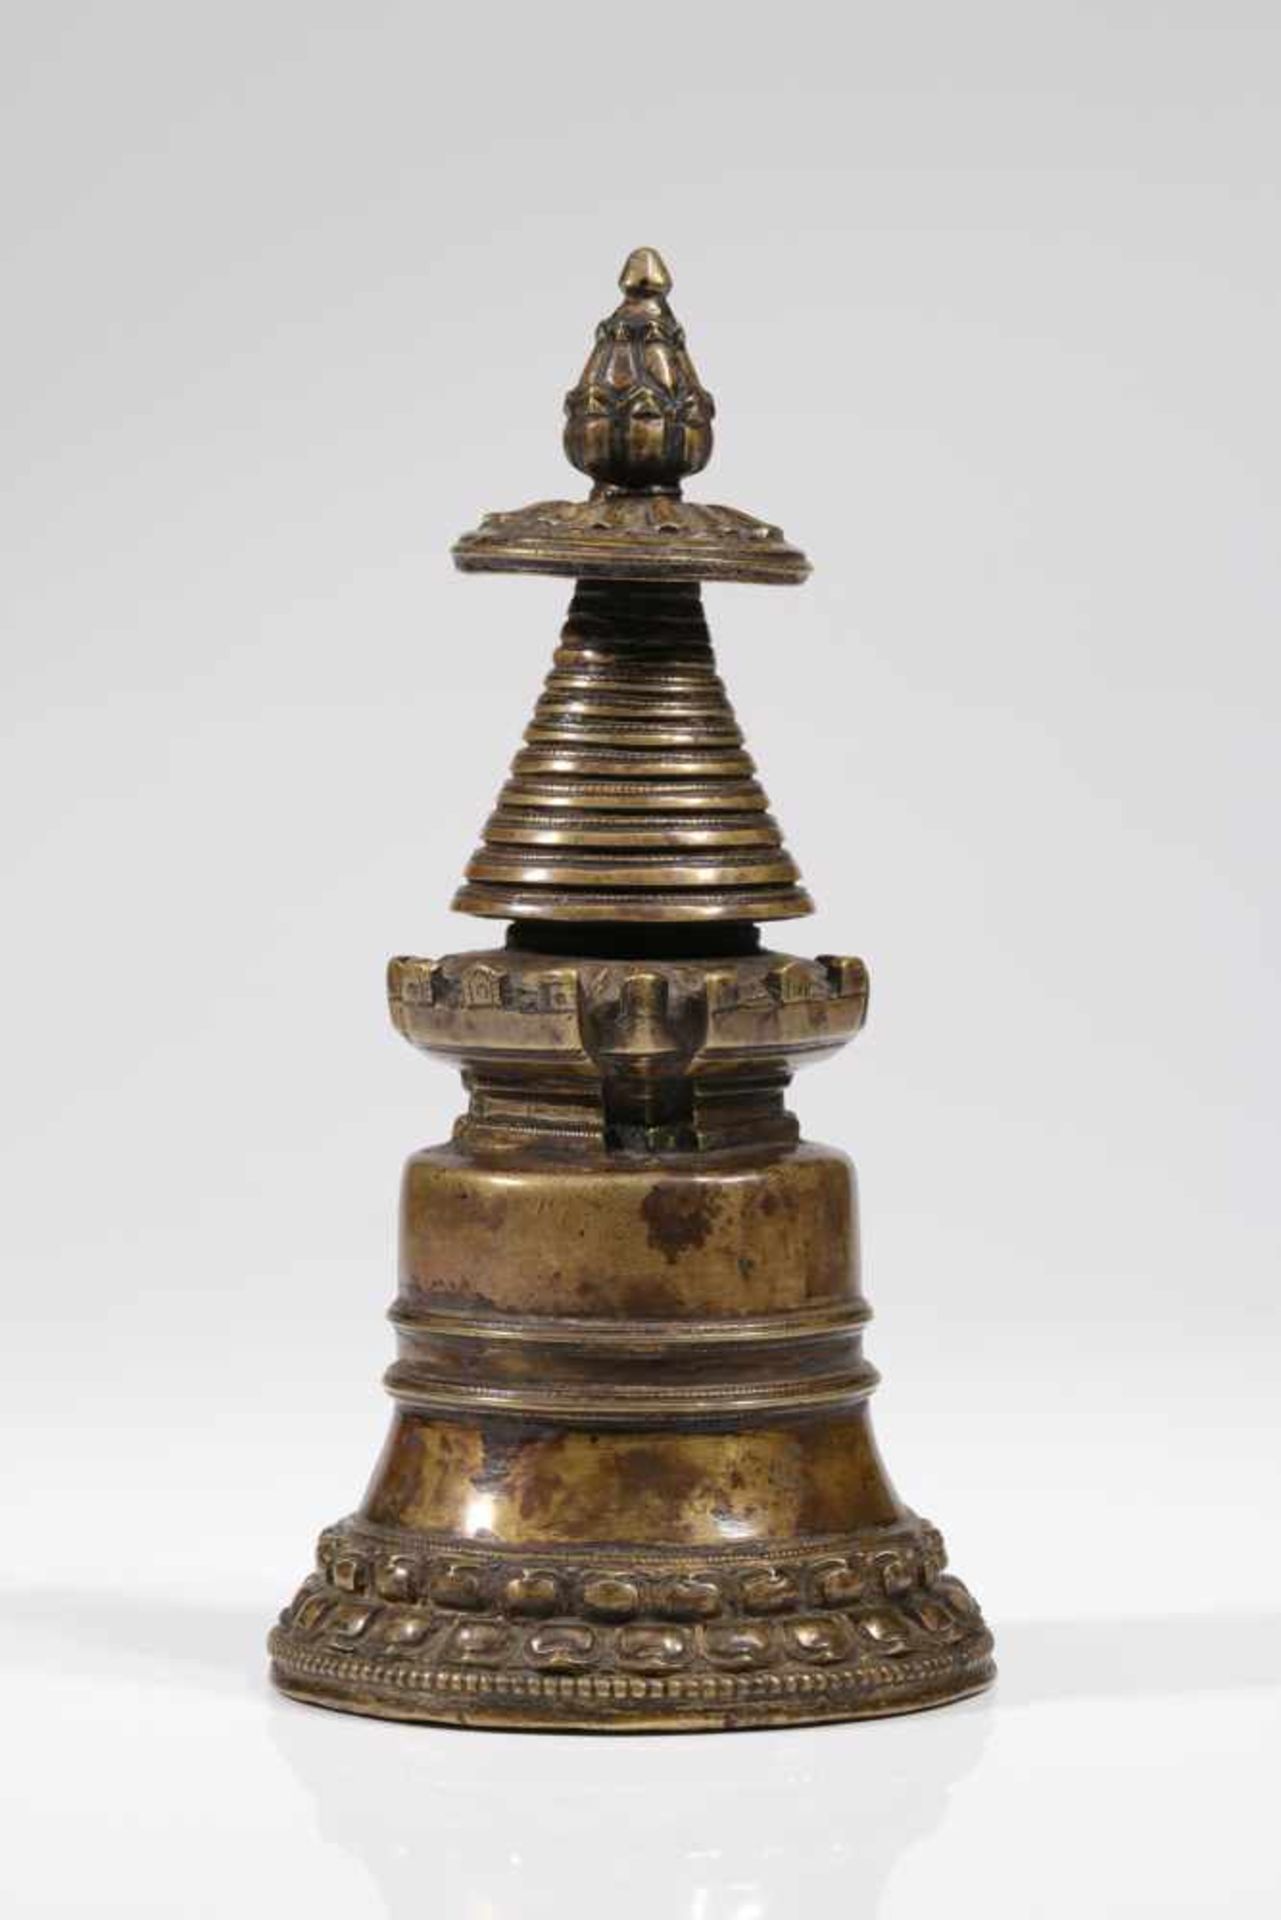 STUPABronze,Tibet, 16th centuryDimensions: Height 21 cm / Wide 10 cm / Depth 10 cmWeight: 818 gramsA